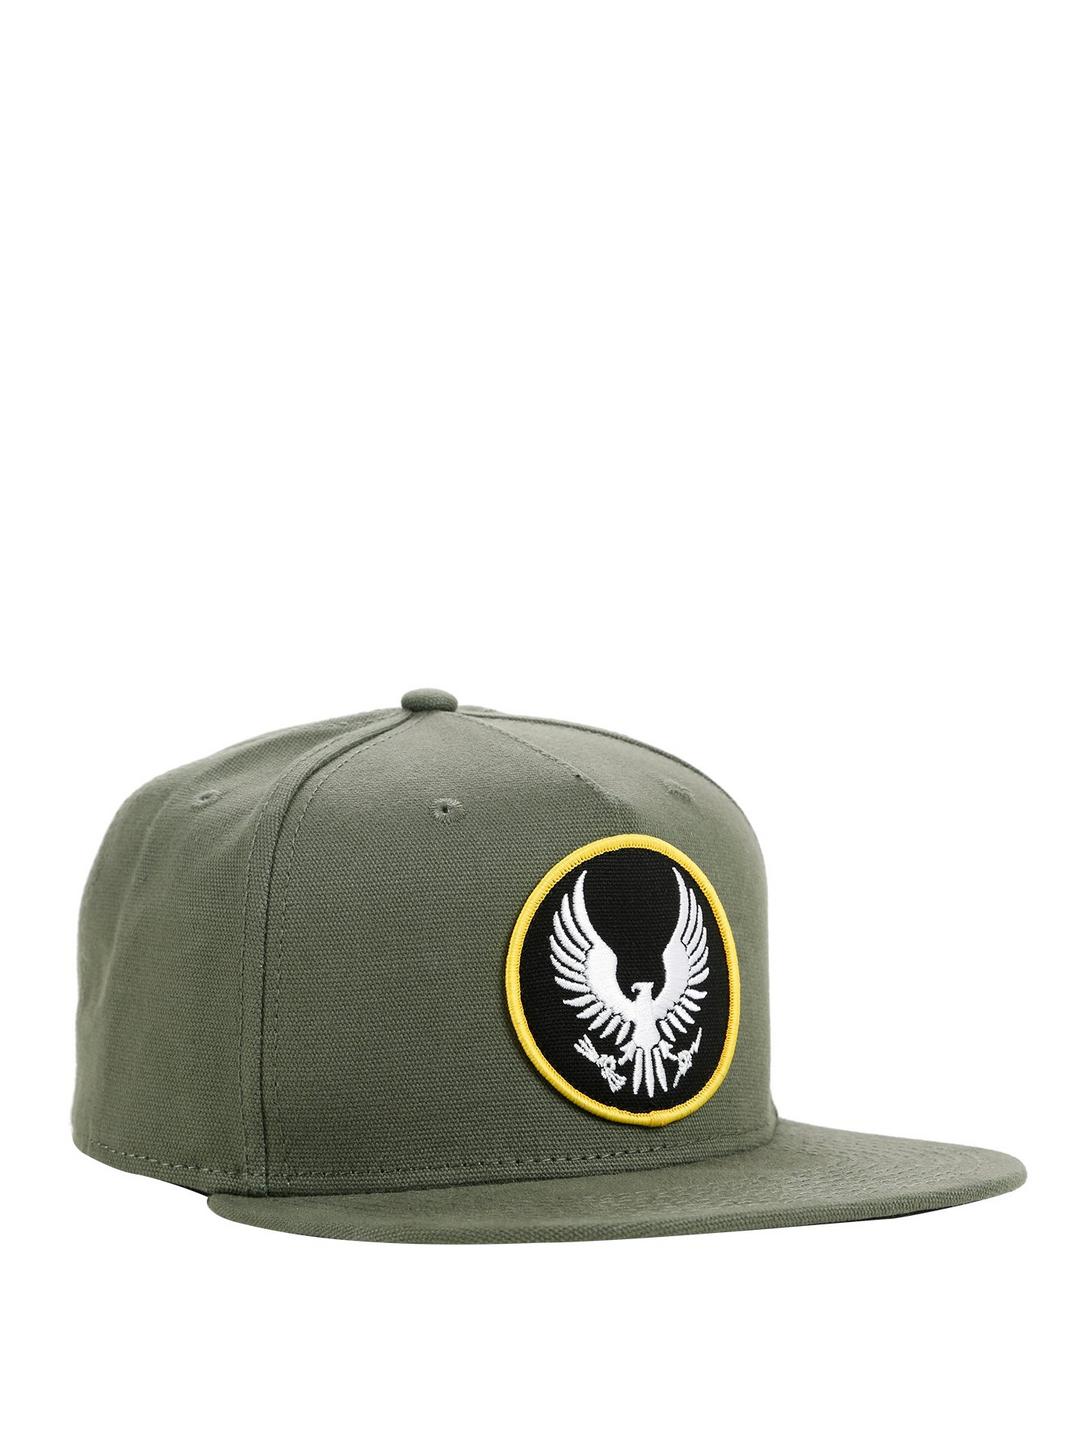 Halo UNSC Logo Snapback Hat, , hi-res